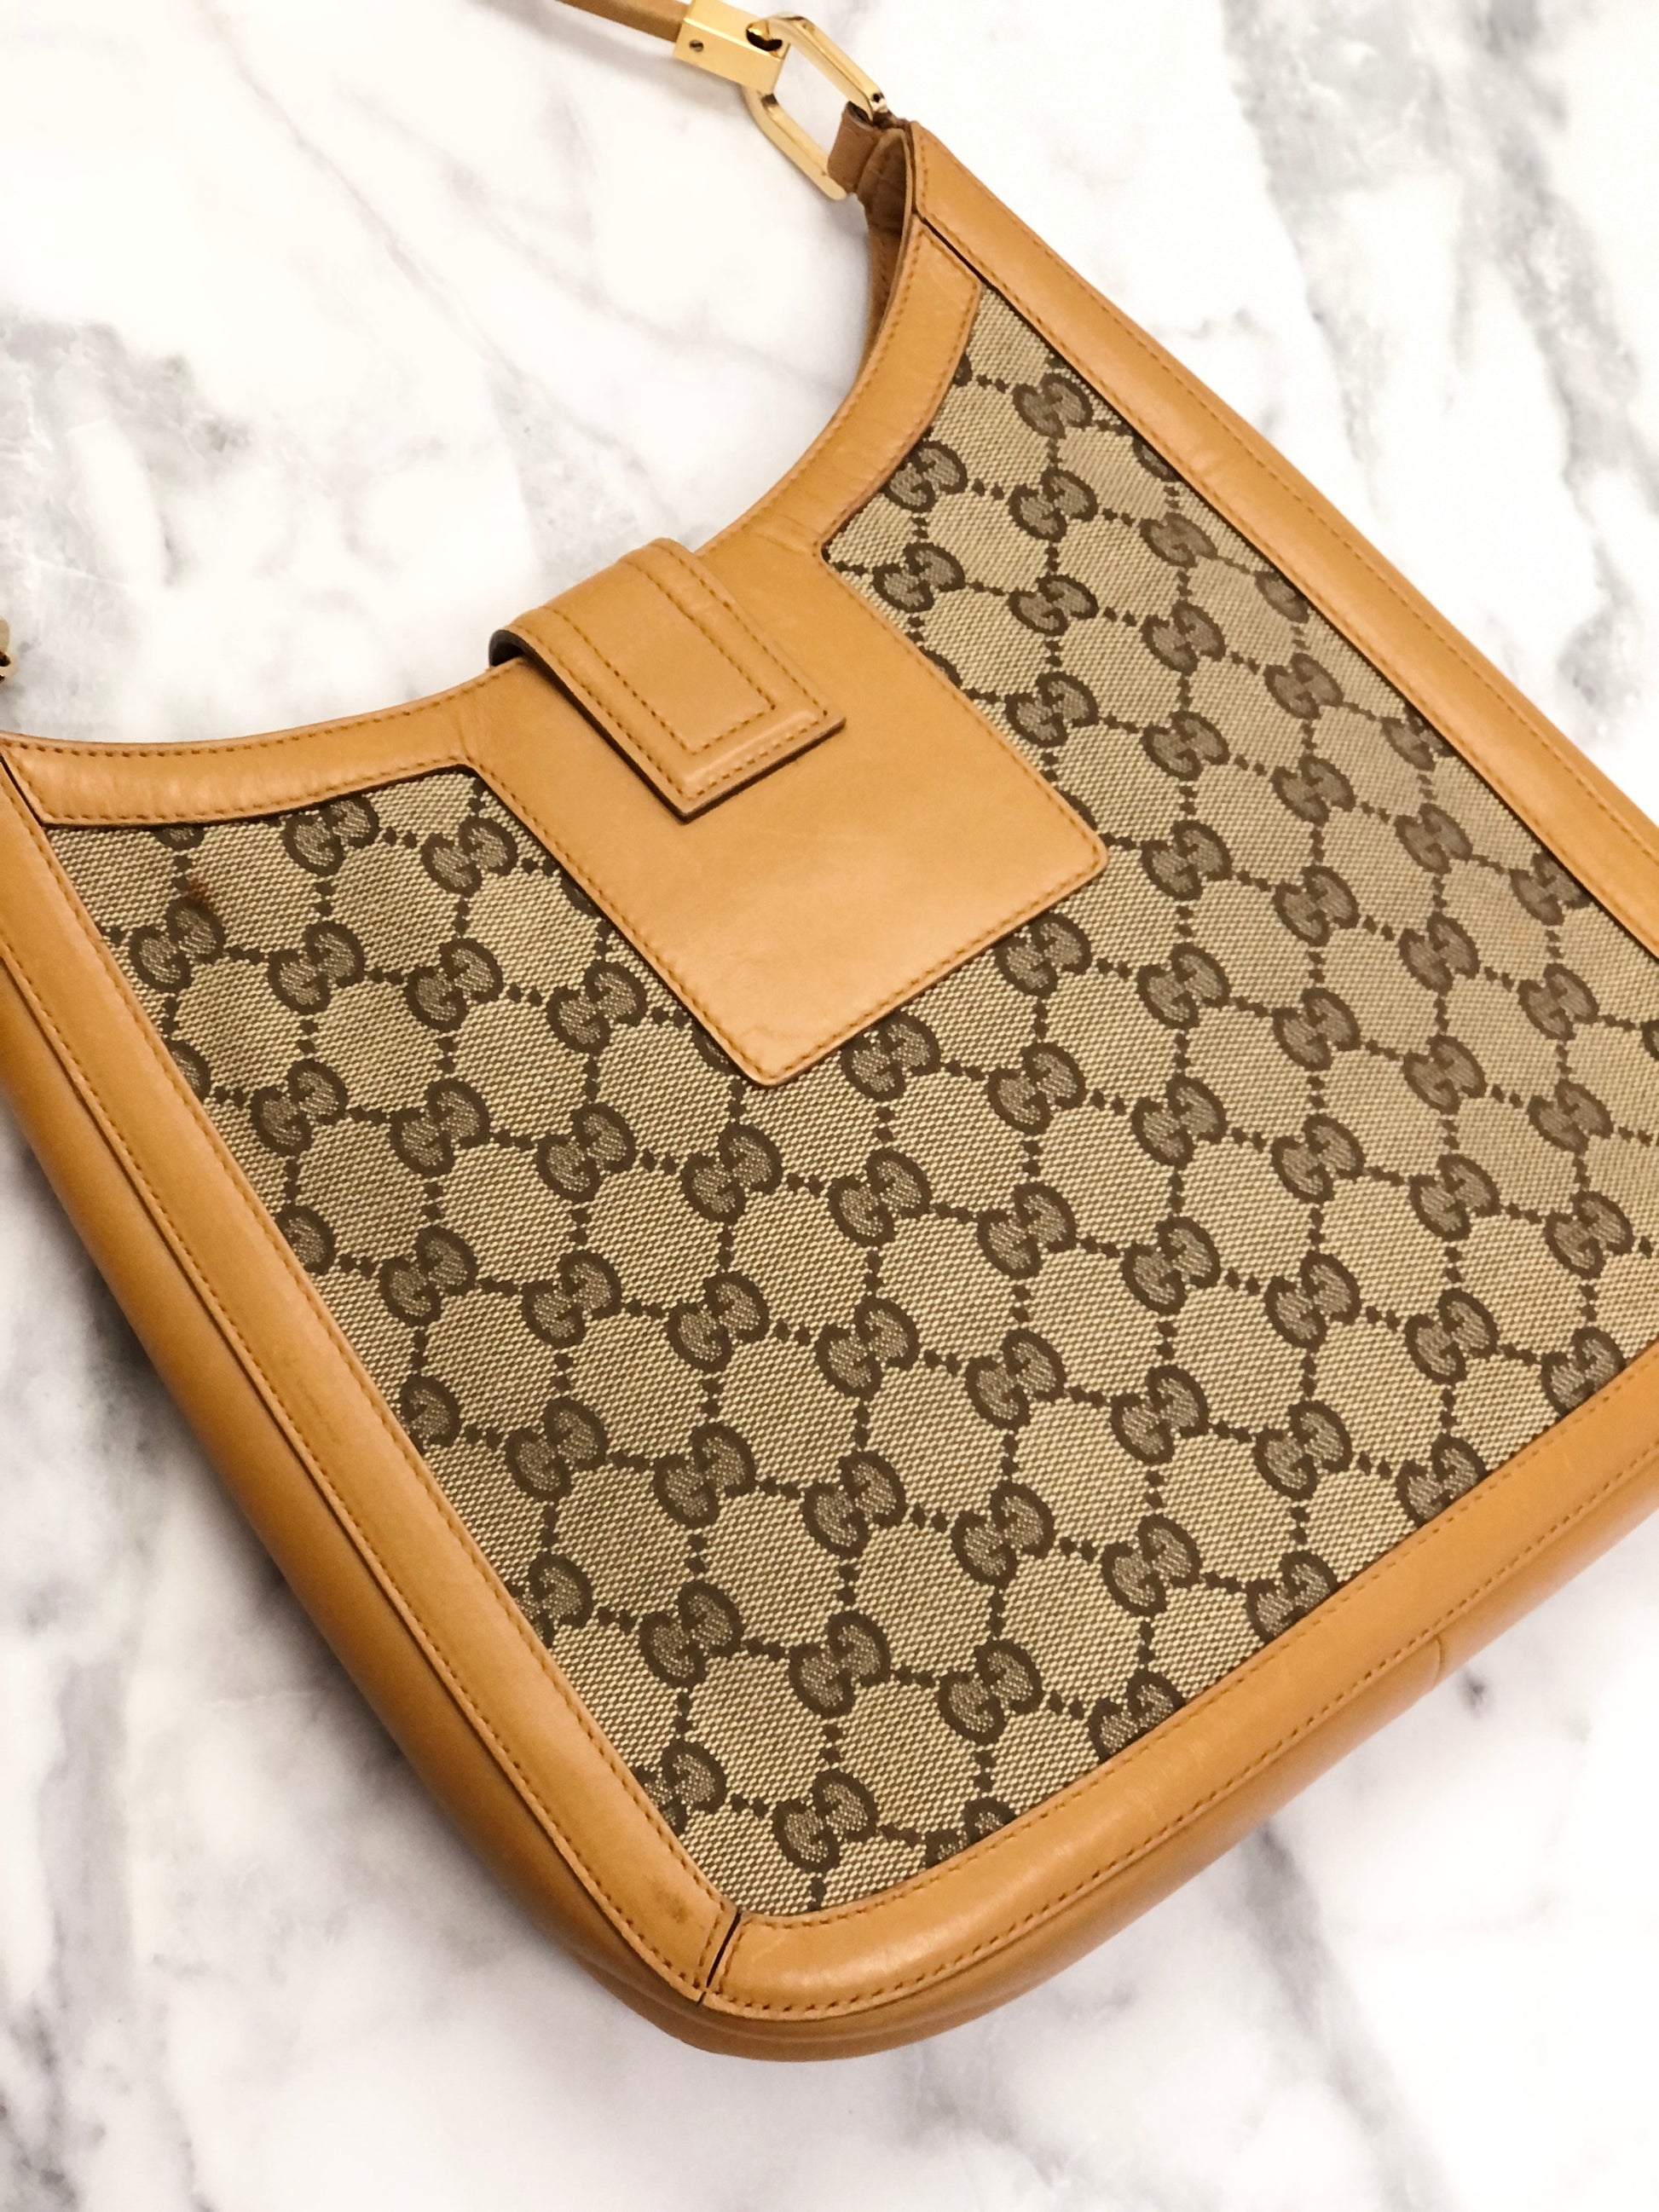 Gucci Shoulder Bag Black Leather GG Gold Metal Fittings Old Gucci Japan  [Used]